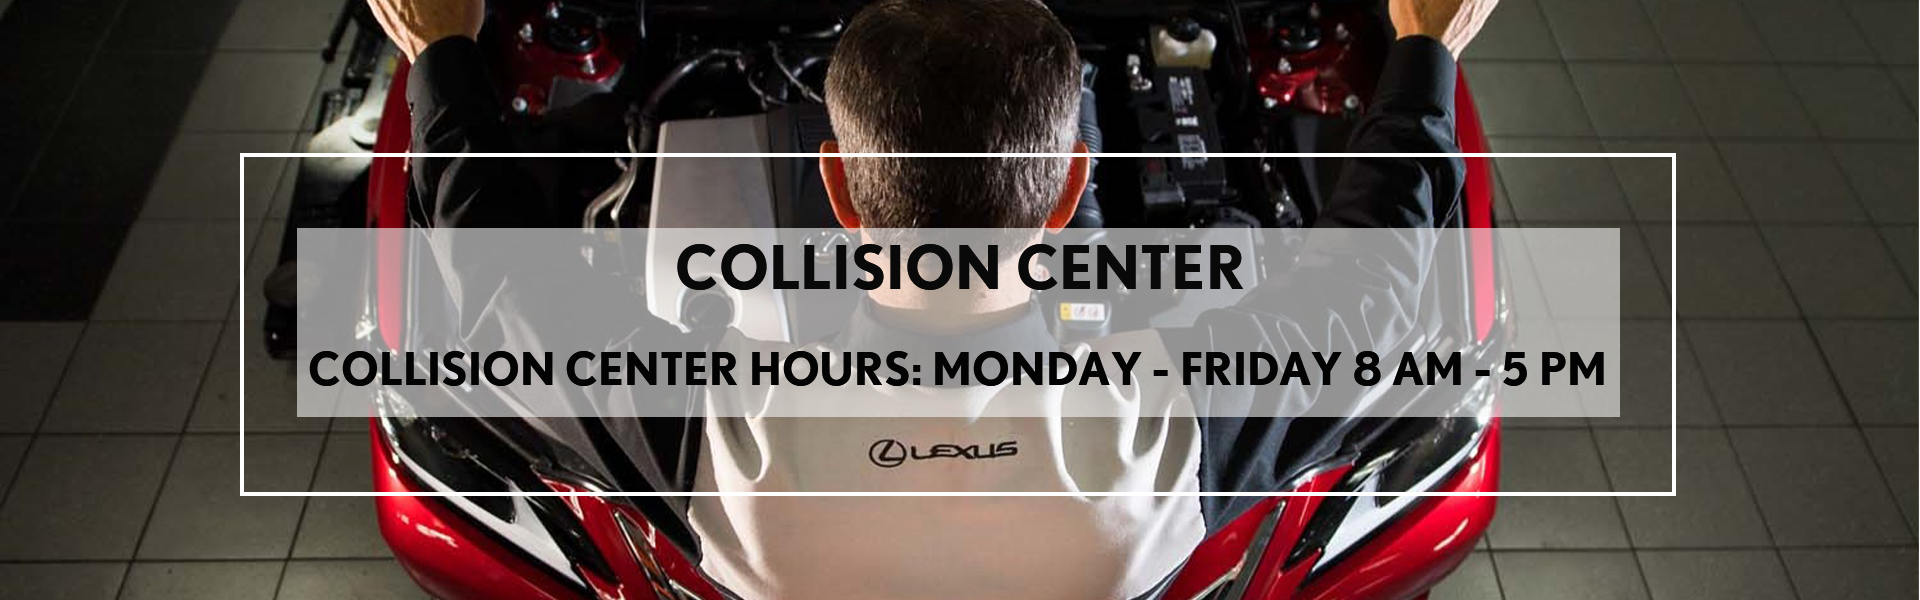 Collision Center